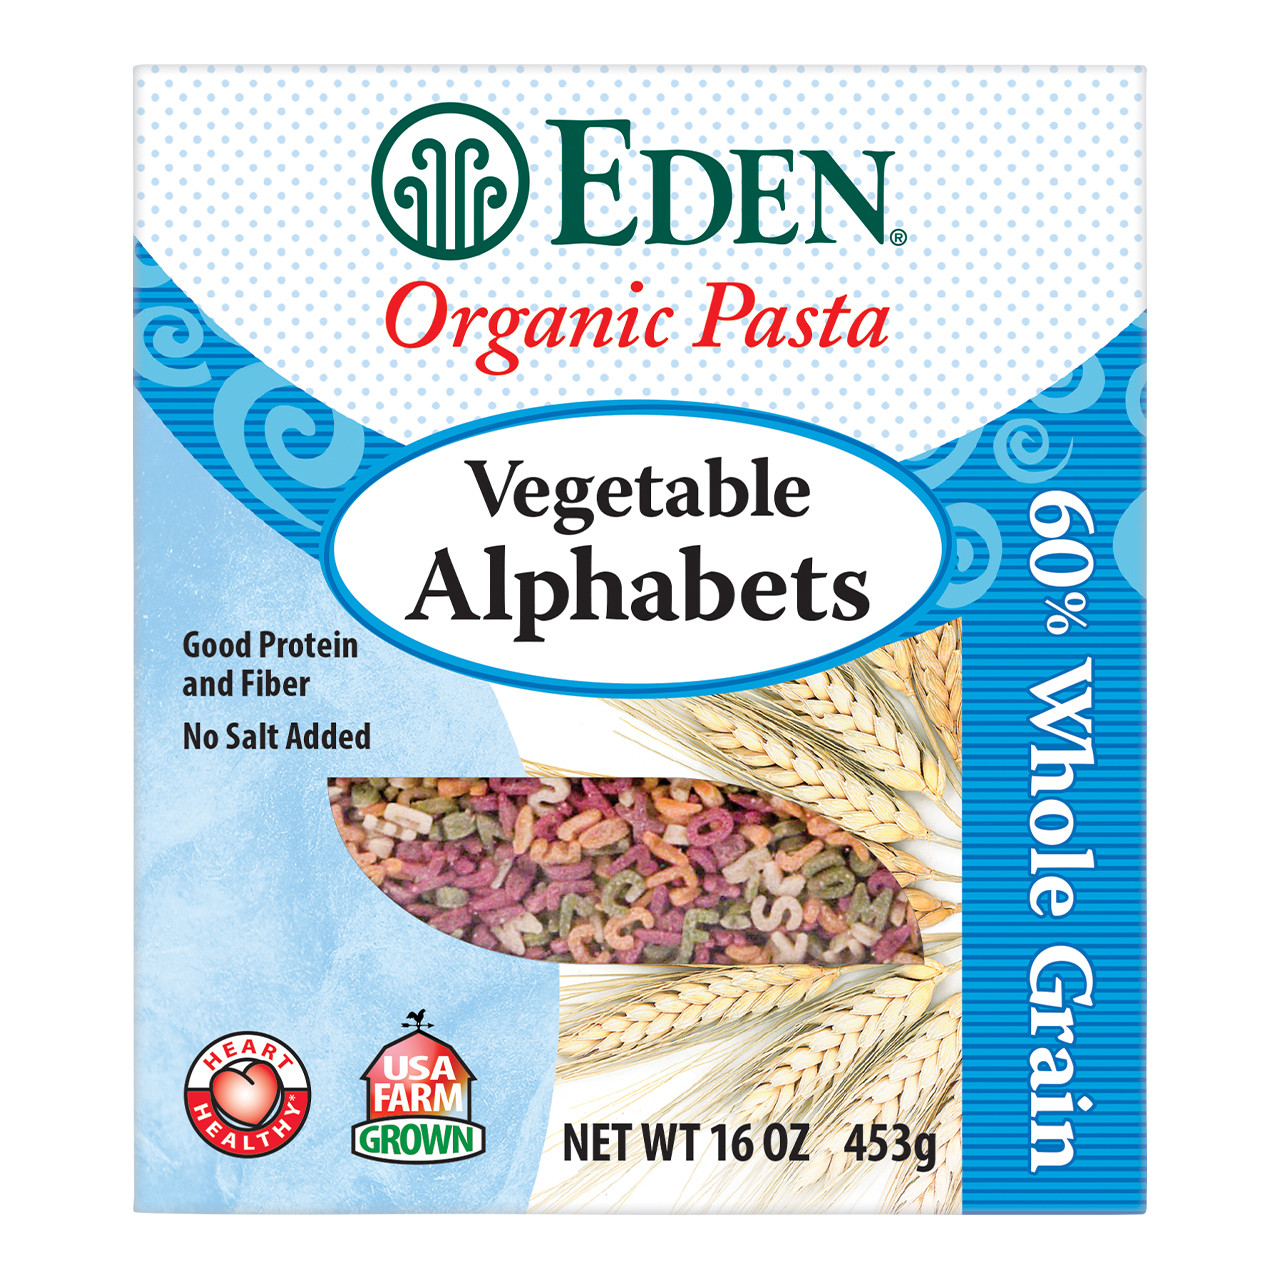 Vegetable Alphabets, Organic, 60% Whole Grain